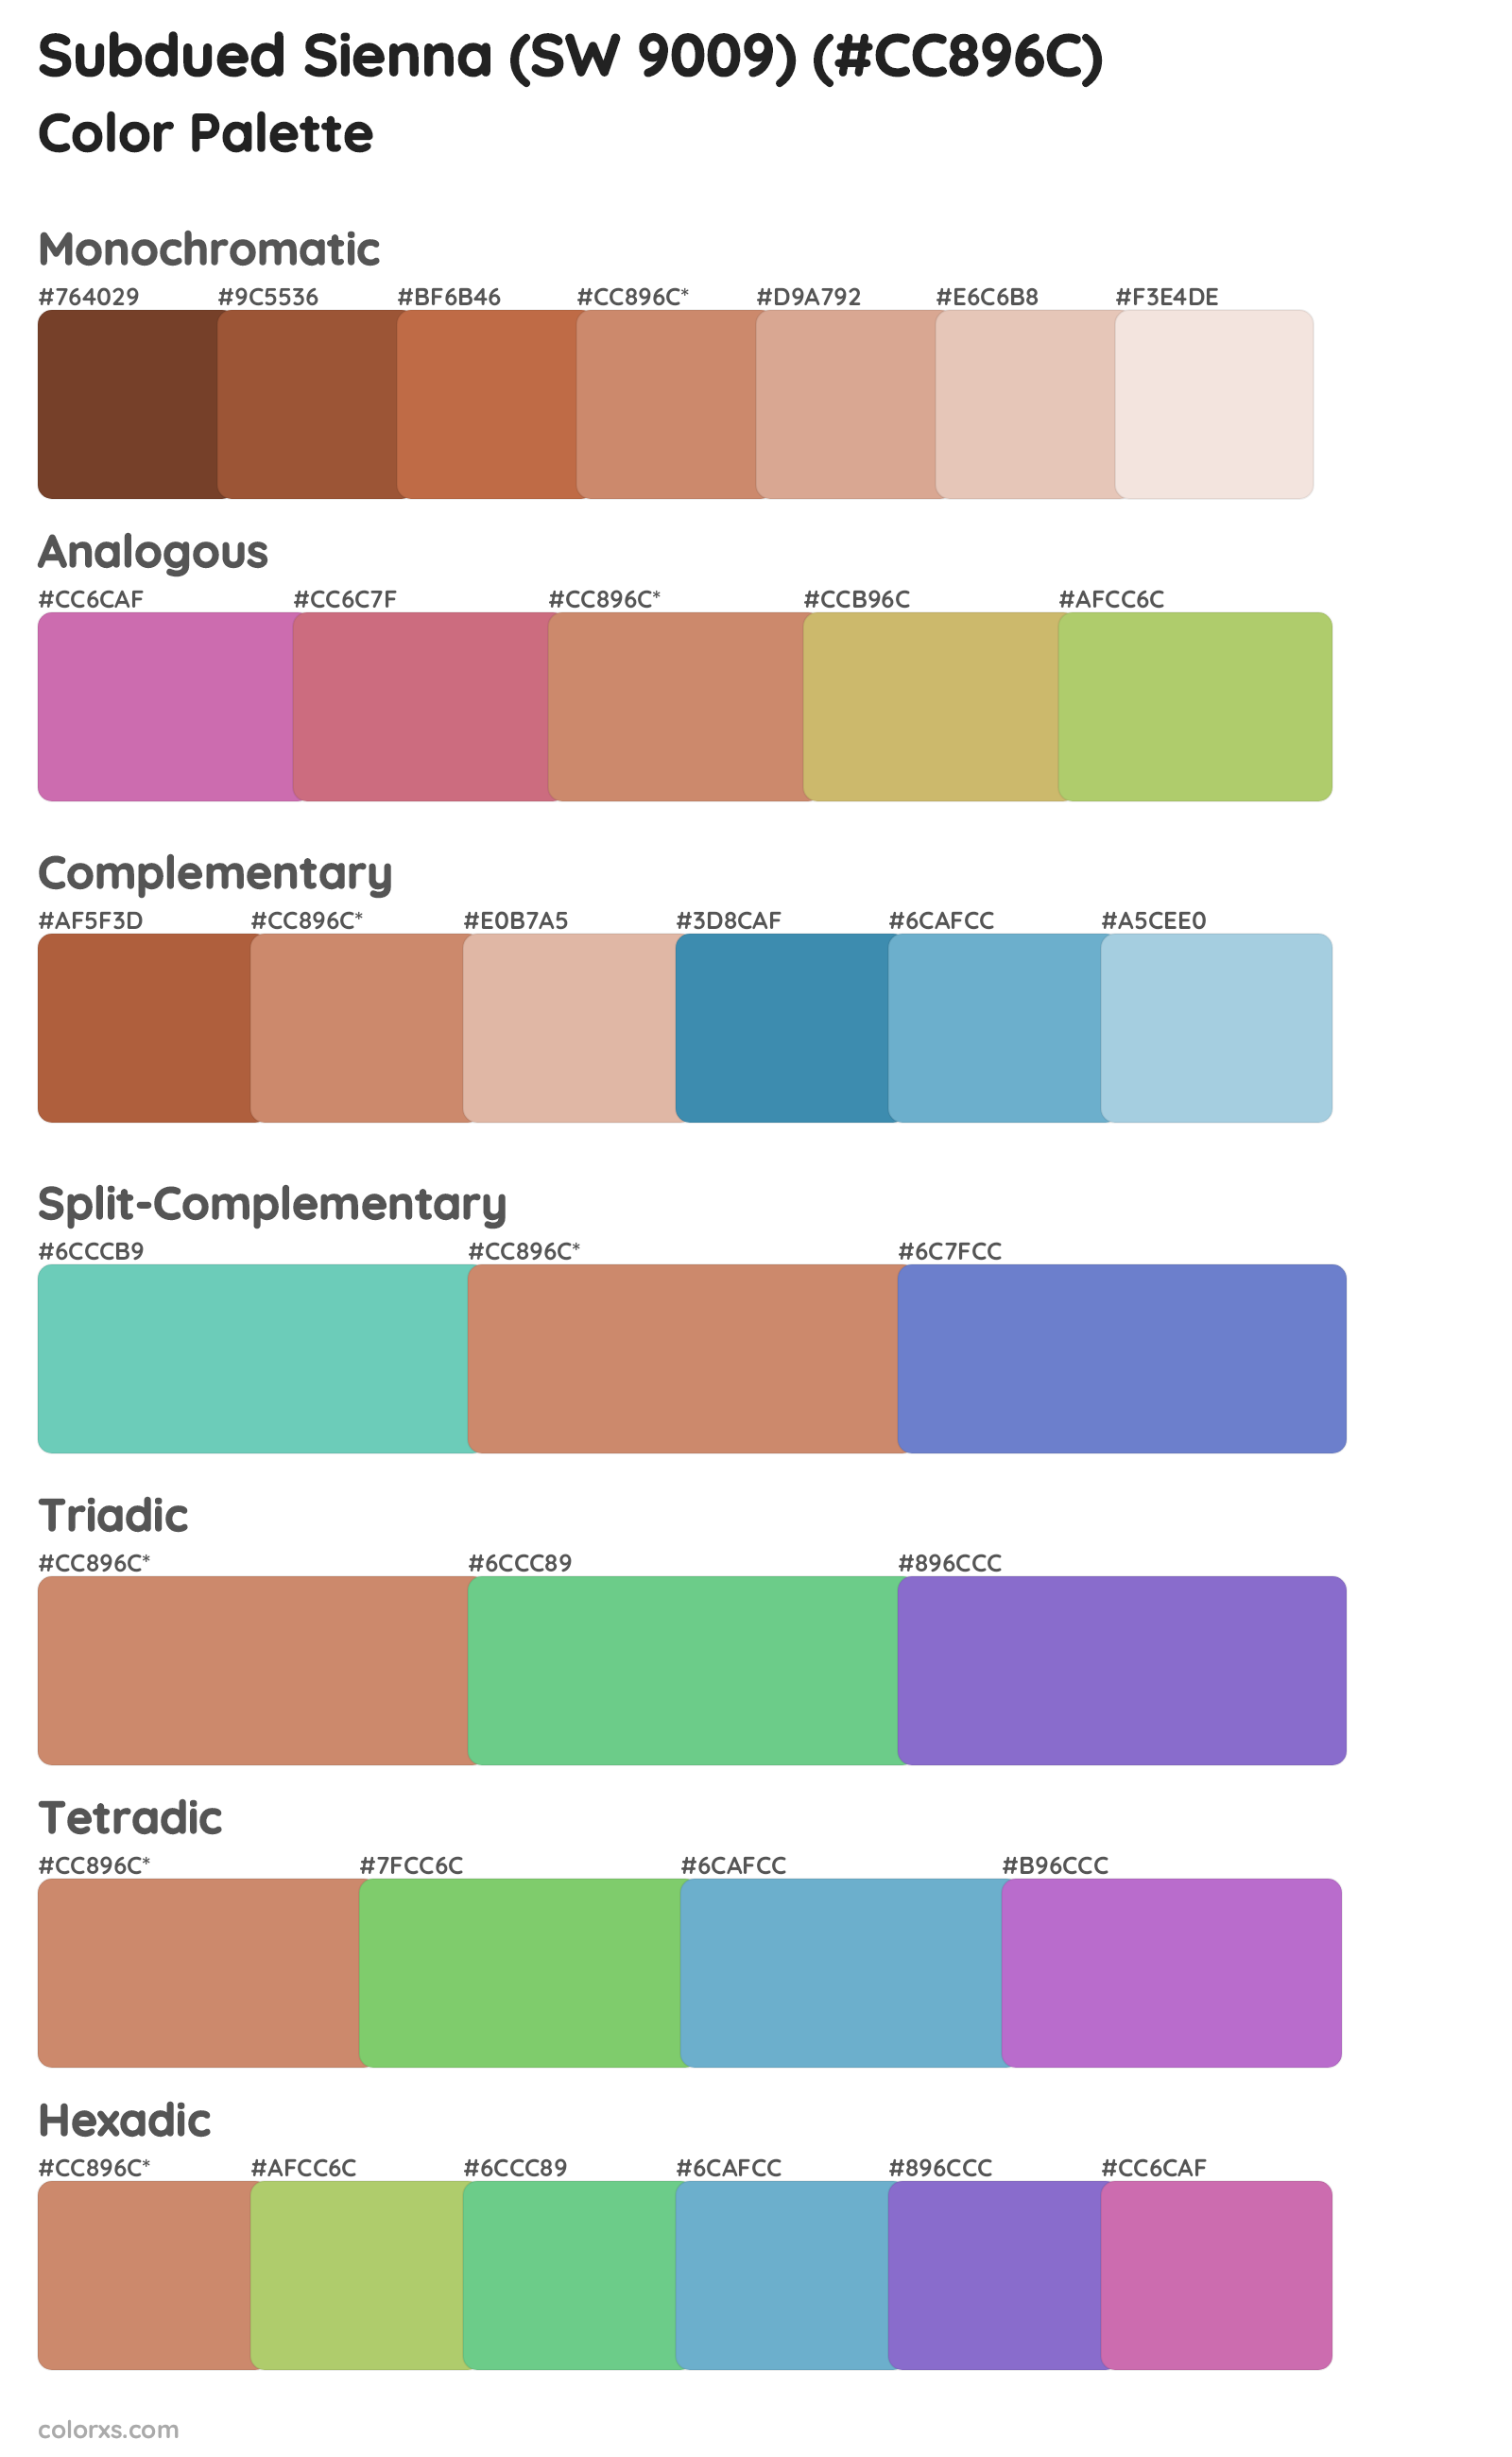 Subdued Sienna (SW 9009) Color Scheme Palettes